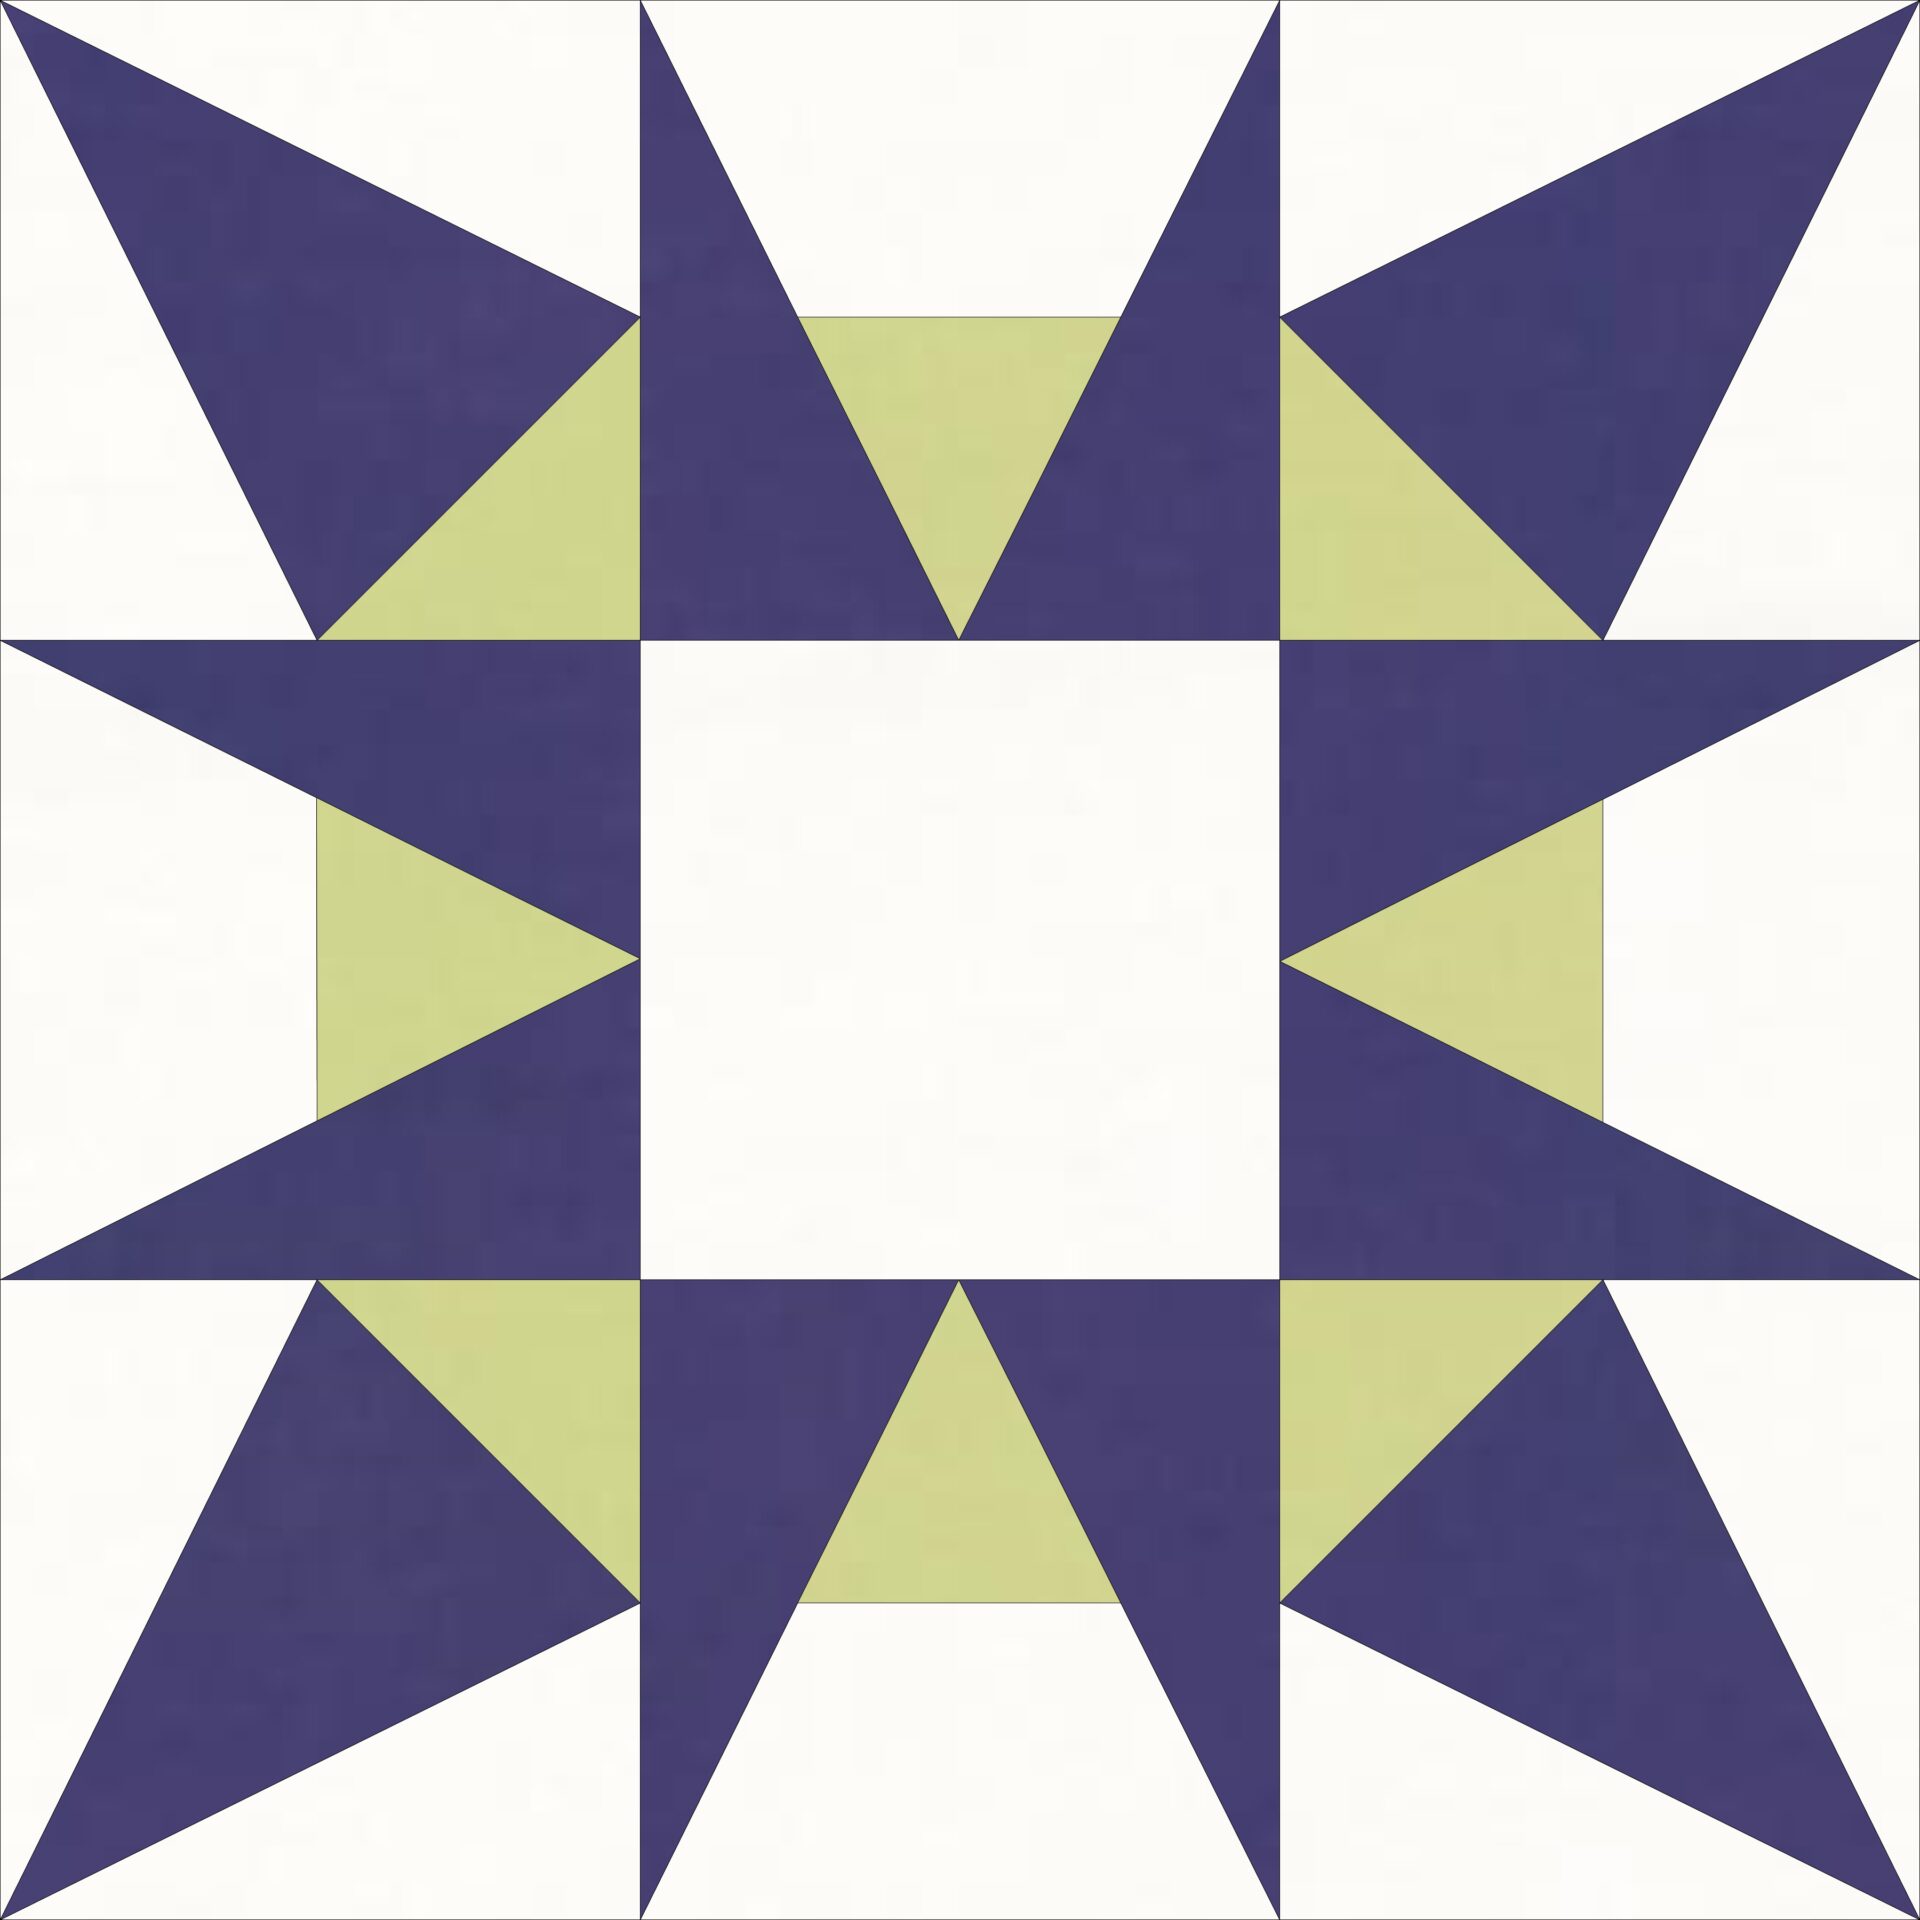 Kite in a Square 3 x 3 Ruler Set